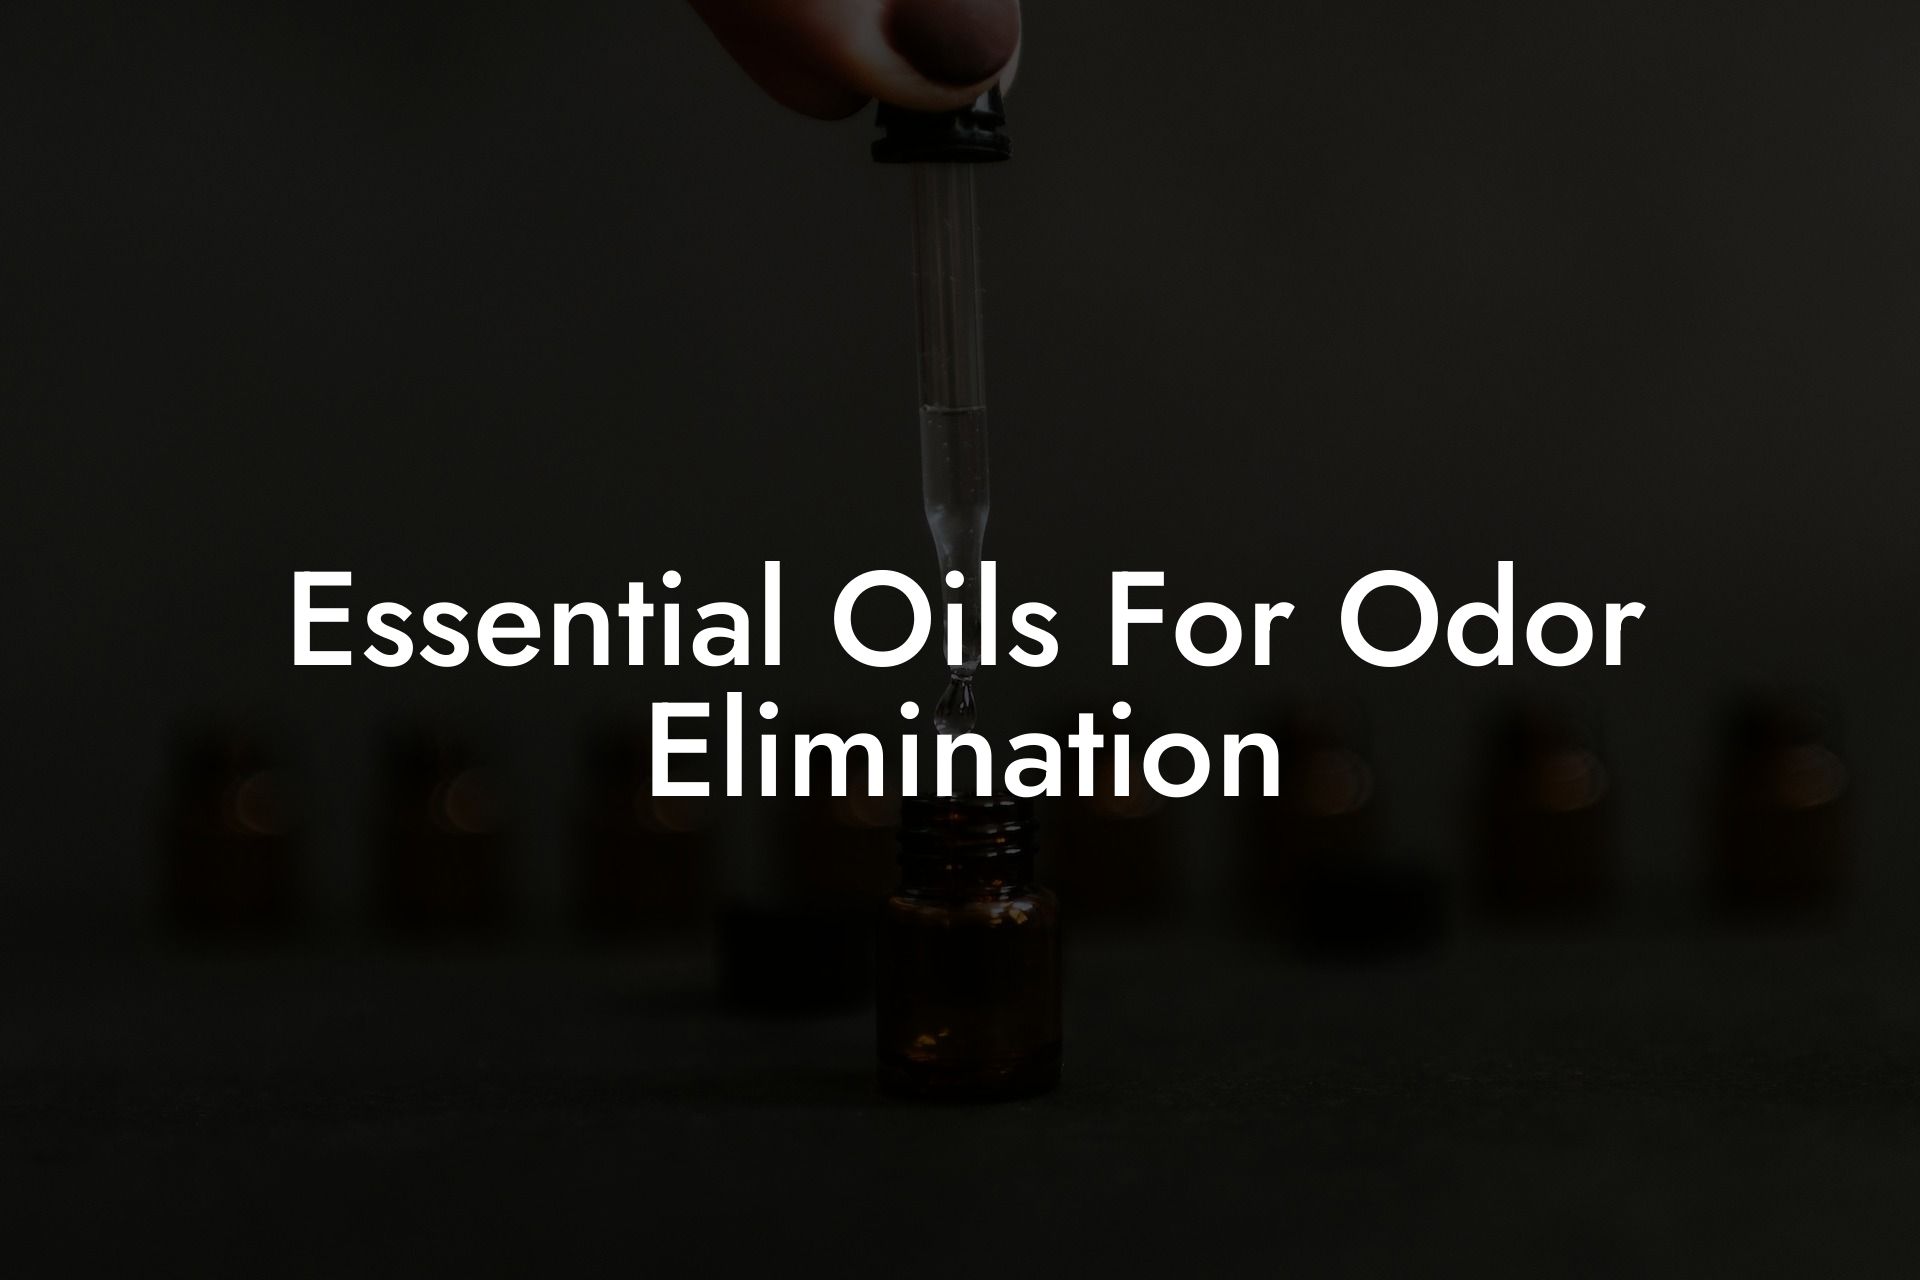 Essential Oils For Odor Elimination